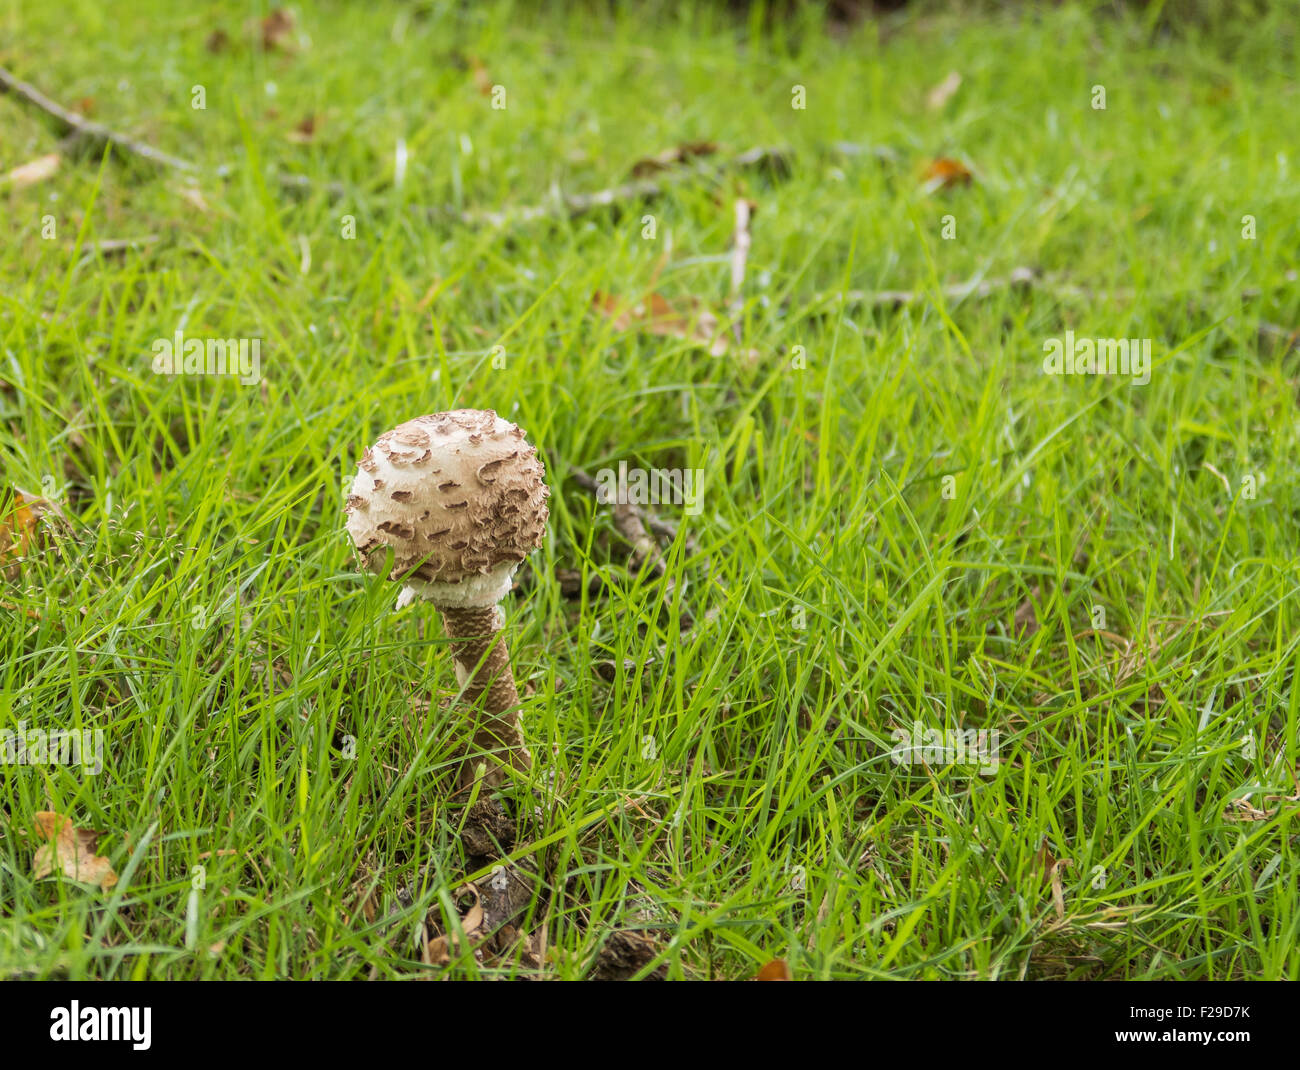 Lepiota procera also known as Common Shaggy Parasol mushroom Stock Photo